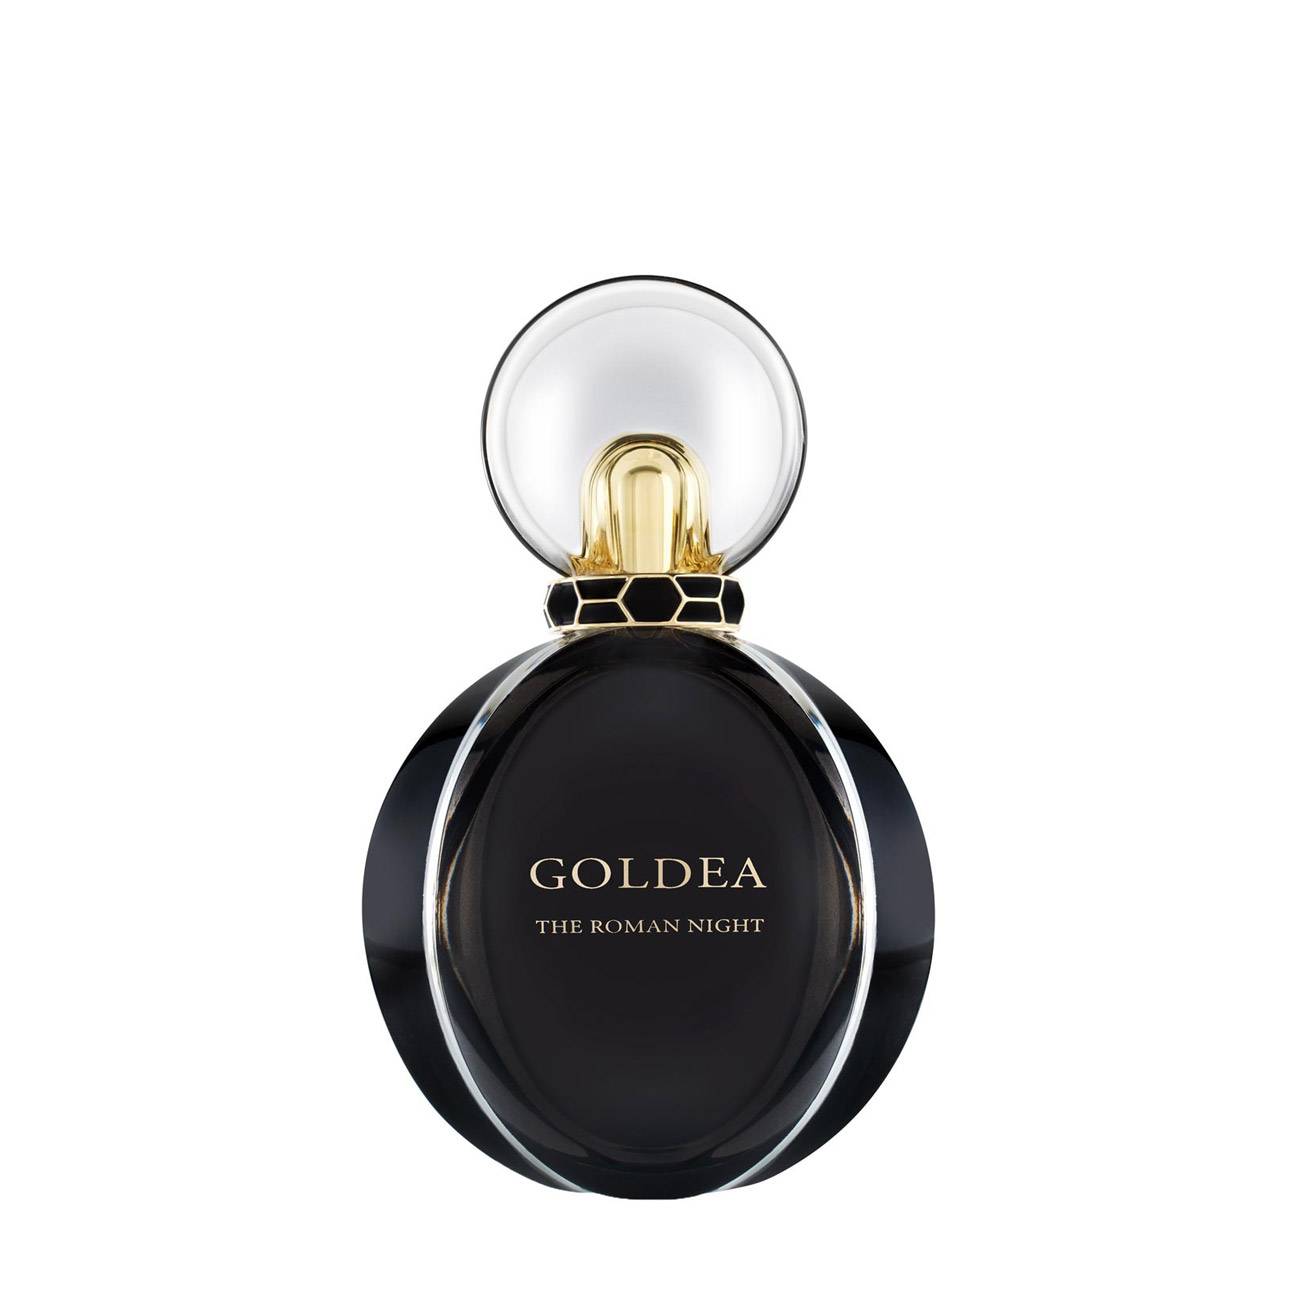 Apa de Parfum Bvlgari GOLDEA THE ROMAN NIGHT 75ml cu comanda online